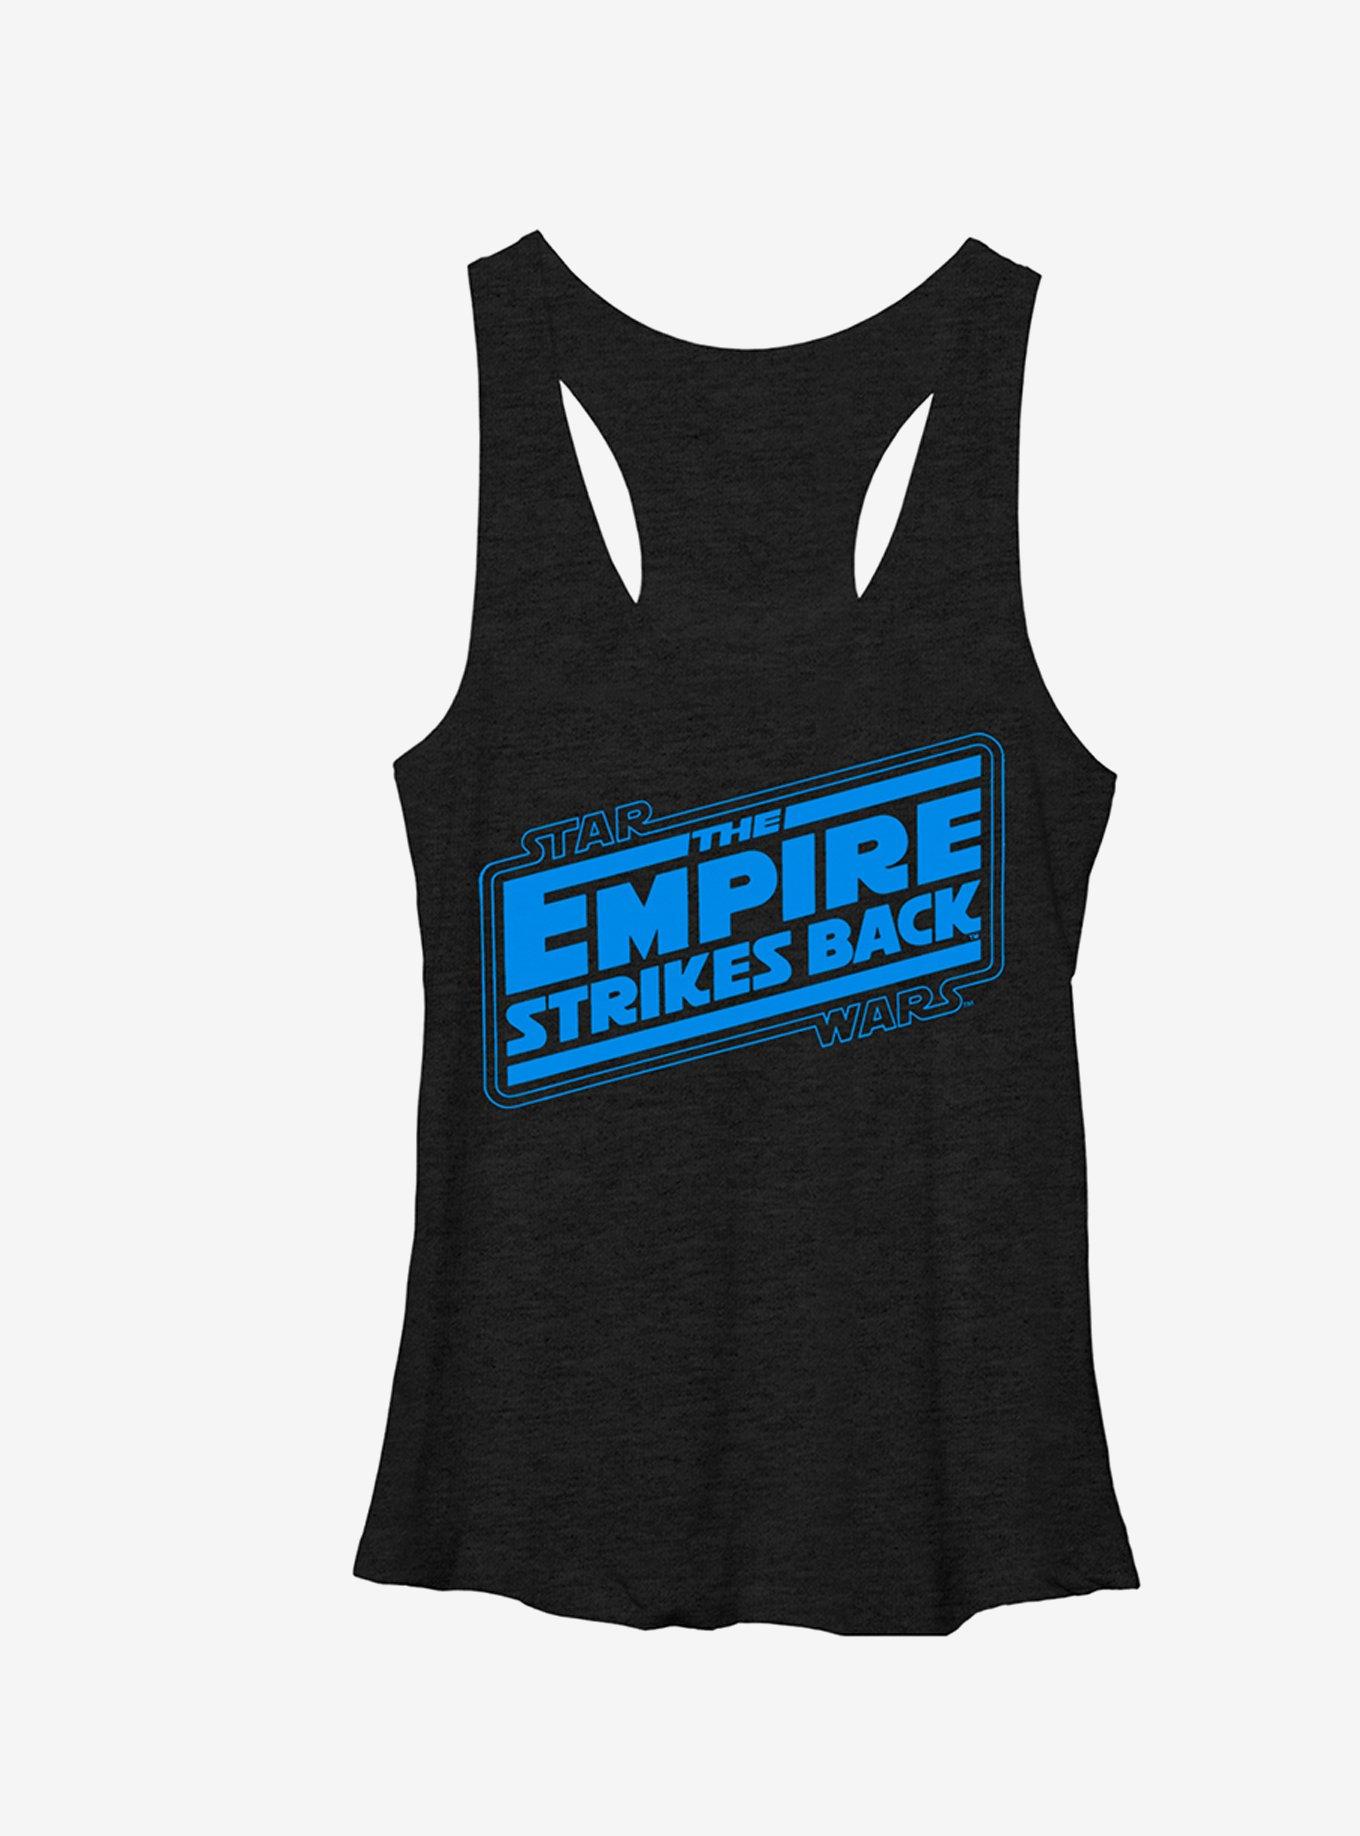 Star Wars Empire Strikes Back Logo Girls Tanks